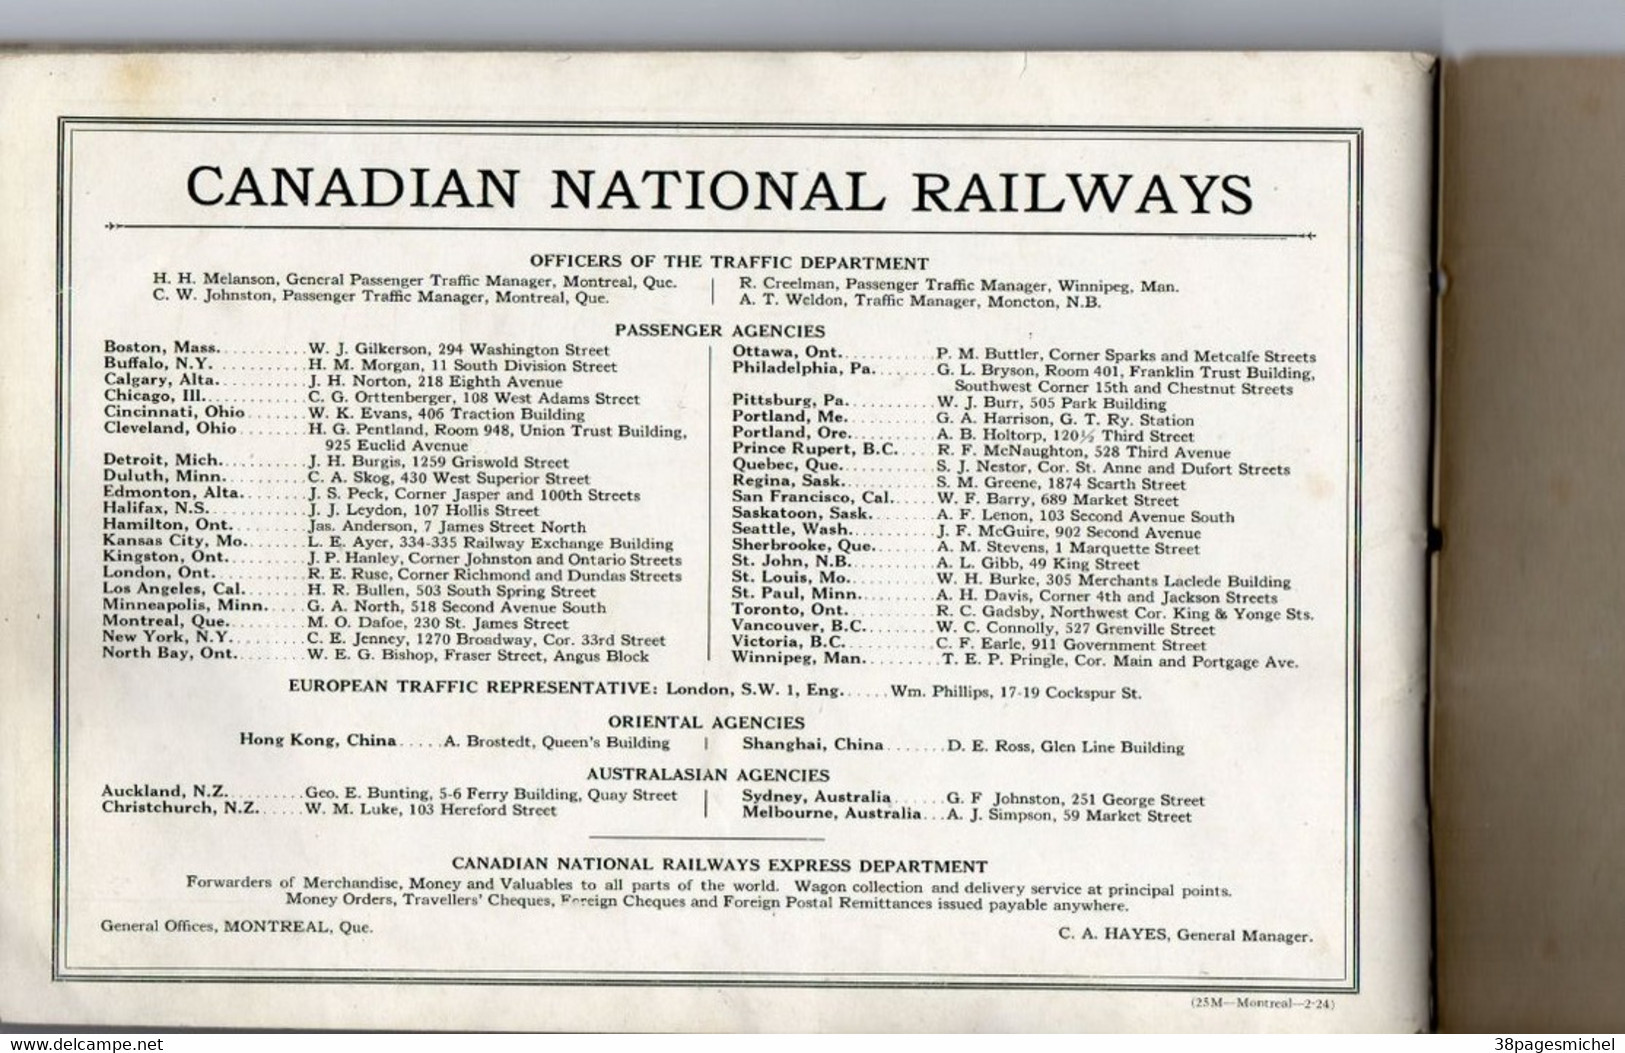 J1801 - SCENIC CANADA - CANADIAN NATIONAL RAILWAYS - CHEMINS DE FER NATIONAUX DU CANADA - Nordamerika